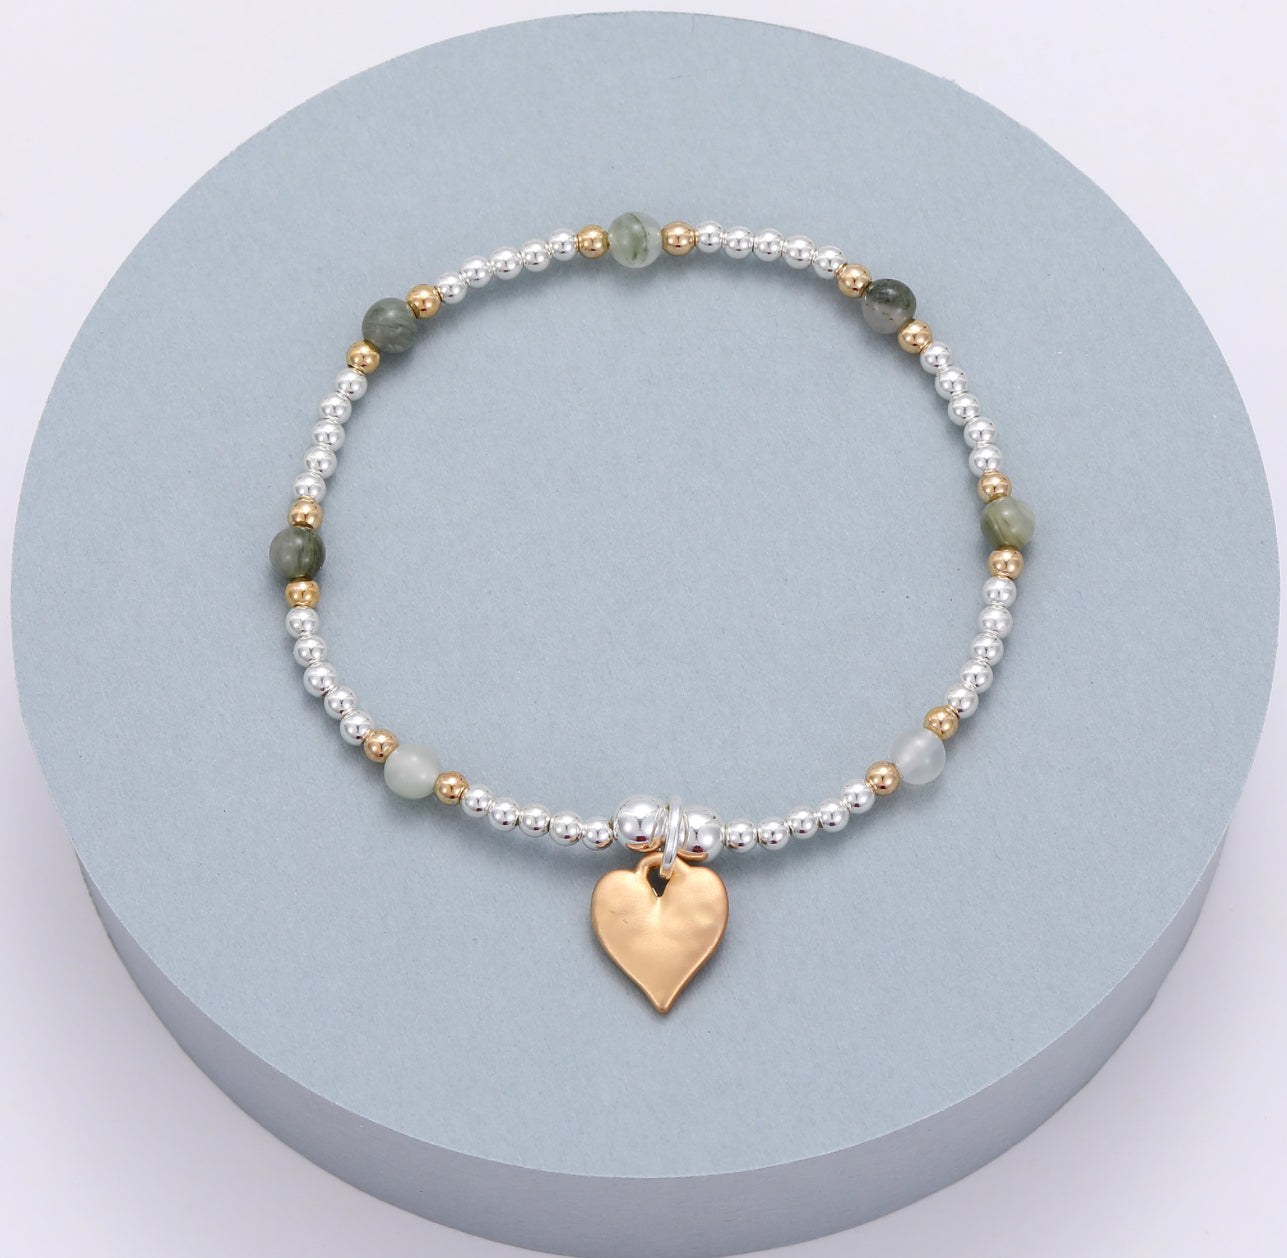 Judy Beaded Bracelet with Heart Charm Silver